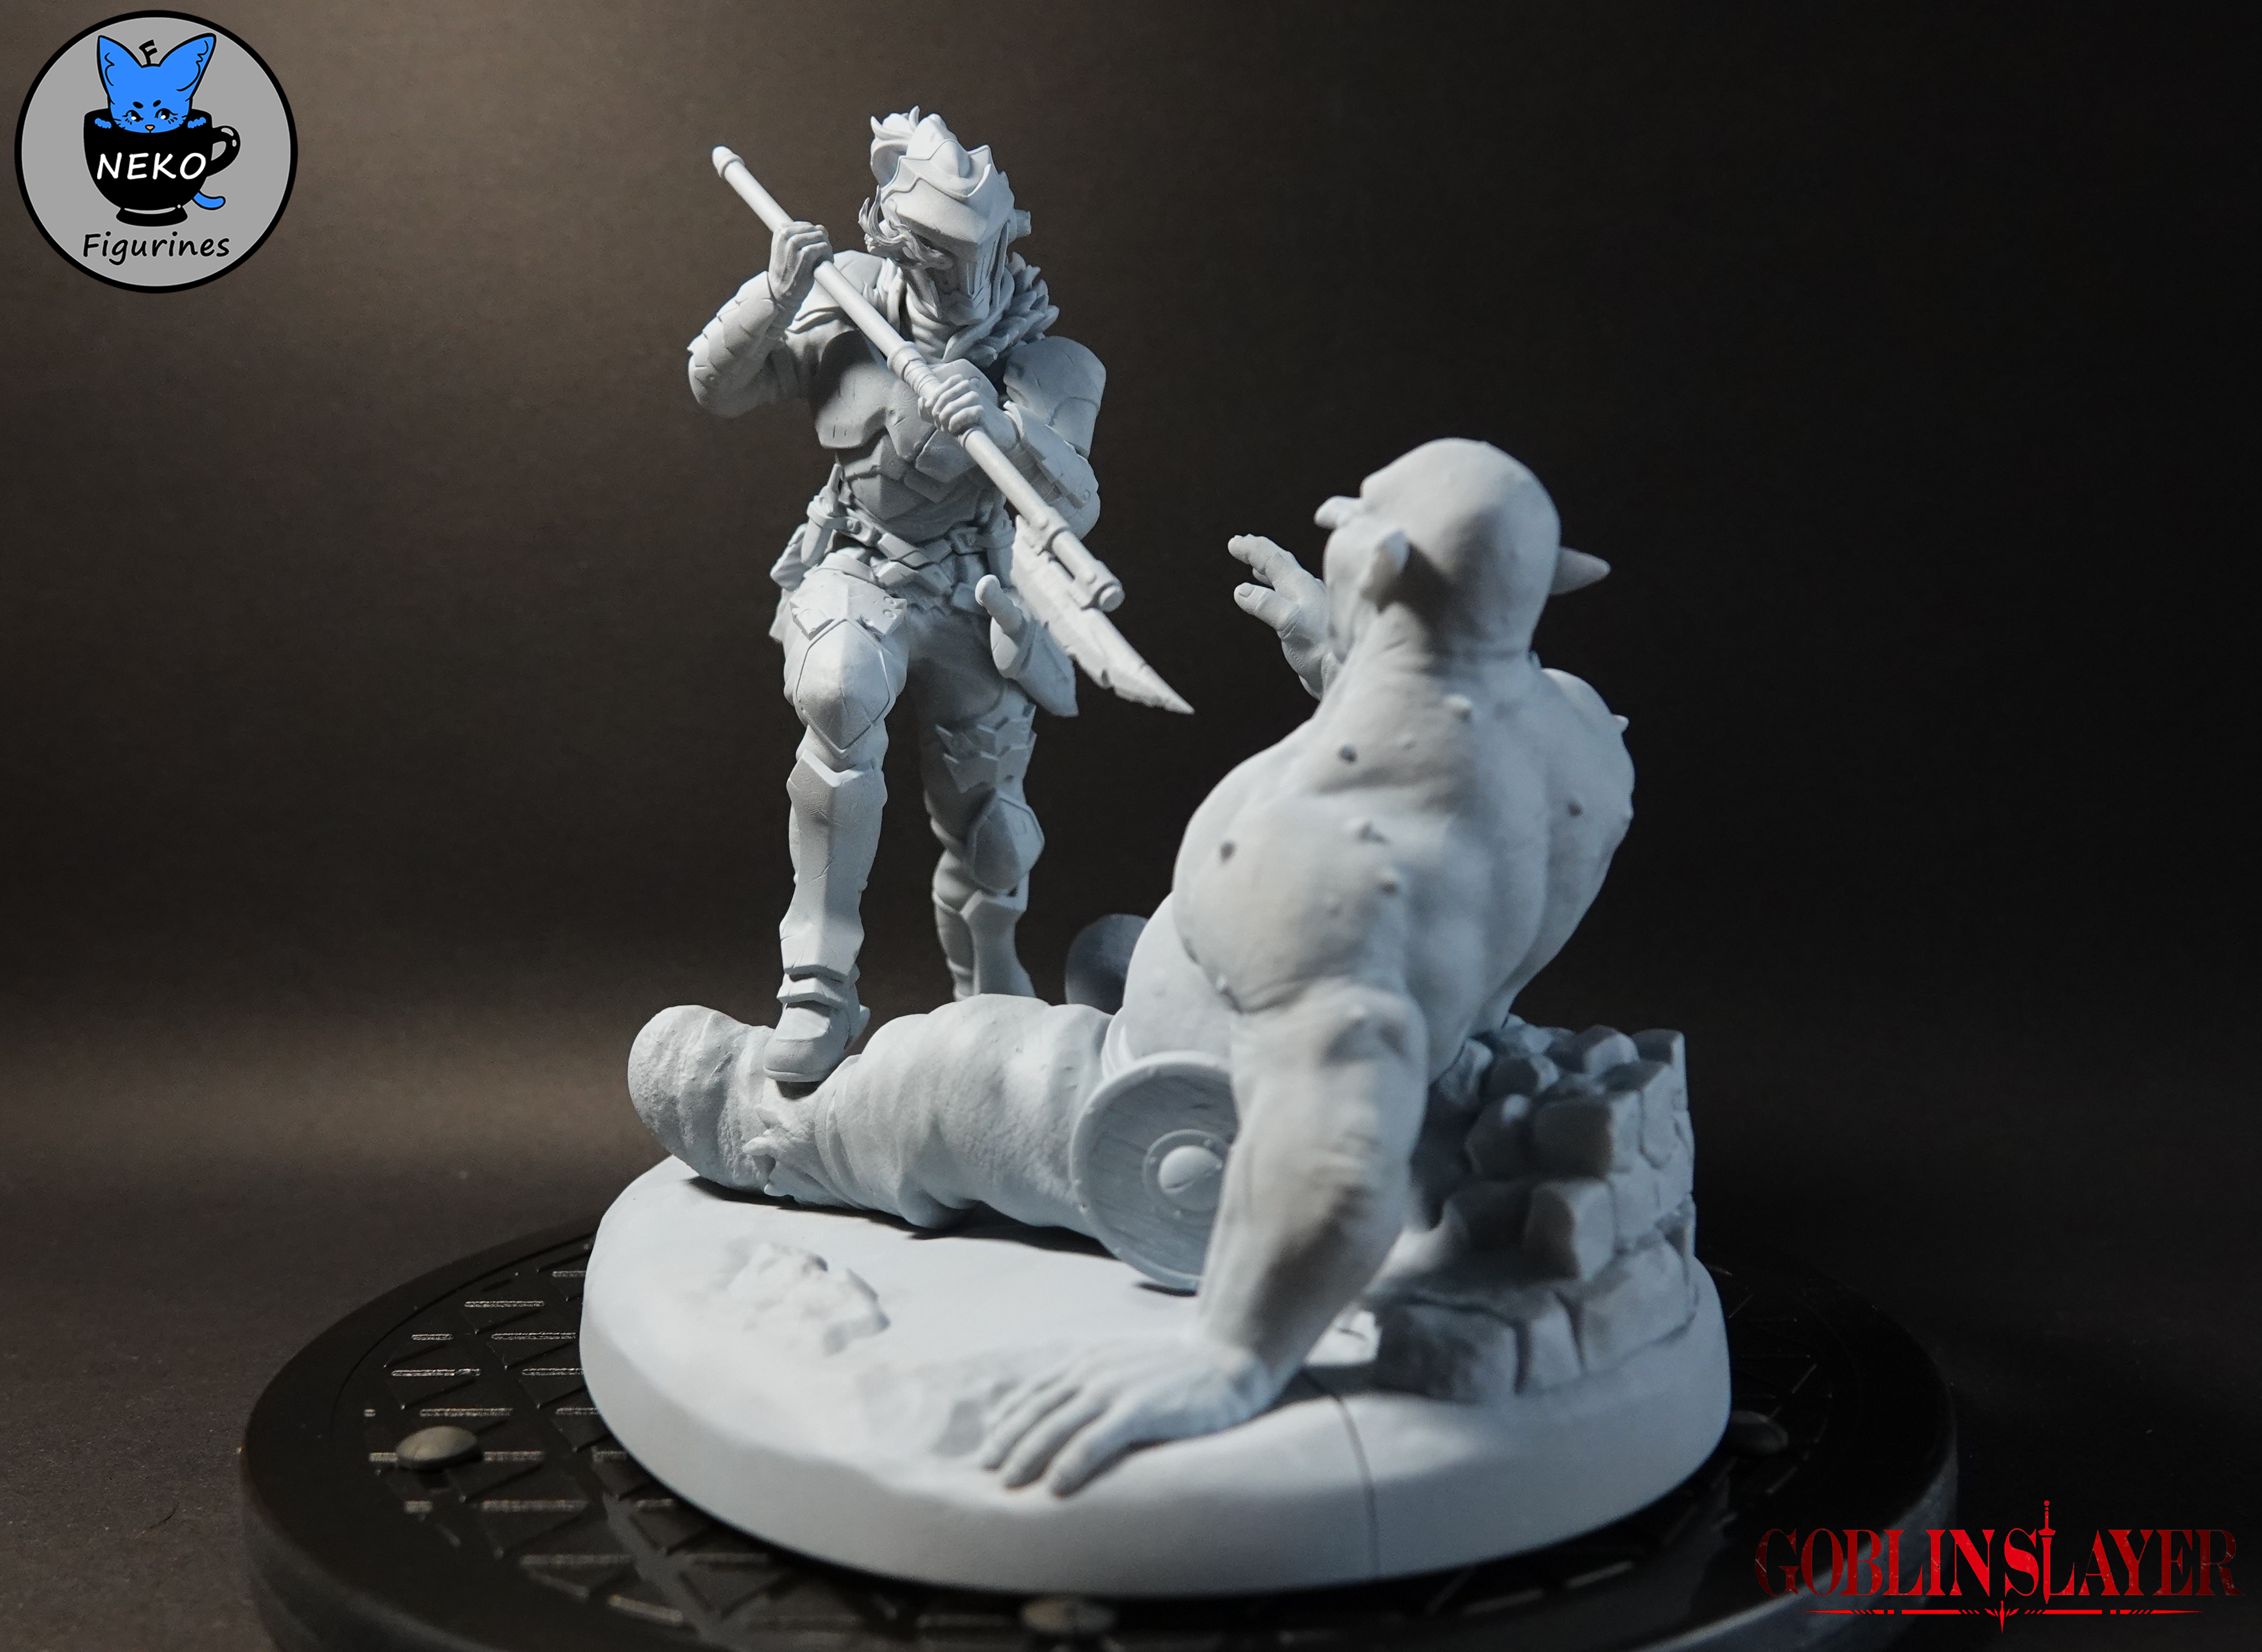 Goblin Slayer - STL Anime Figurine for 3D Printing